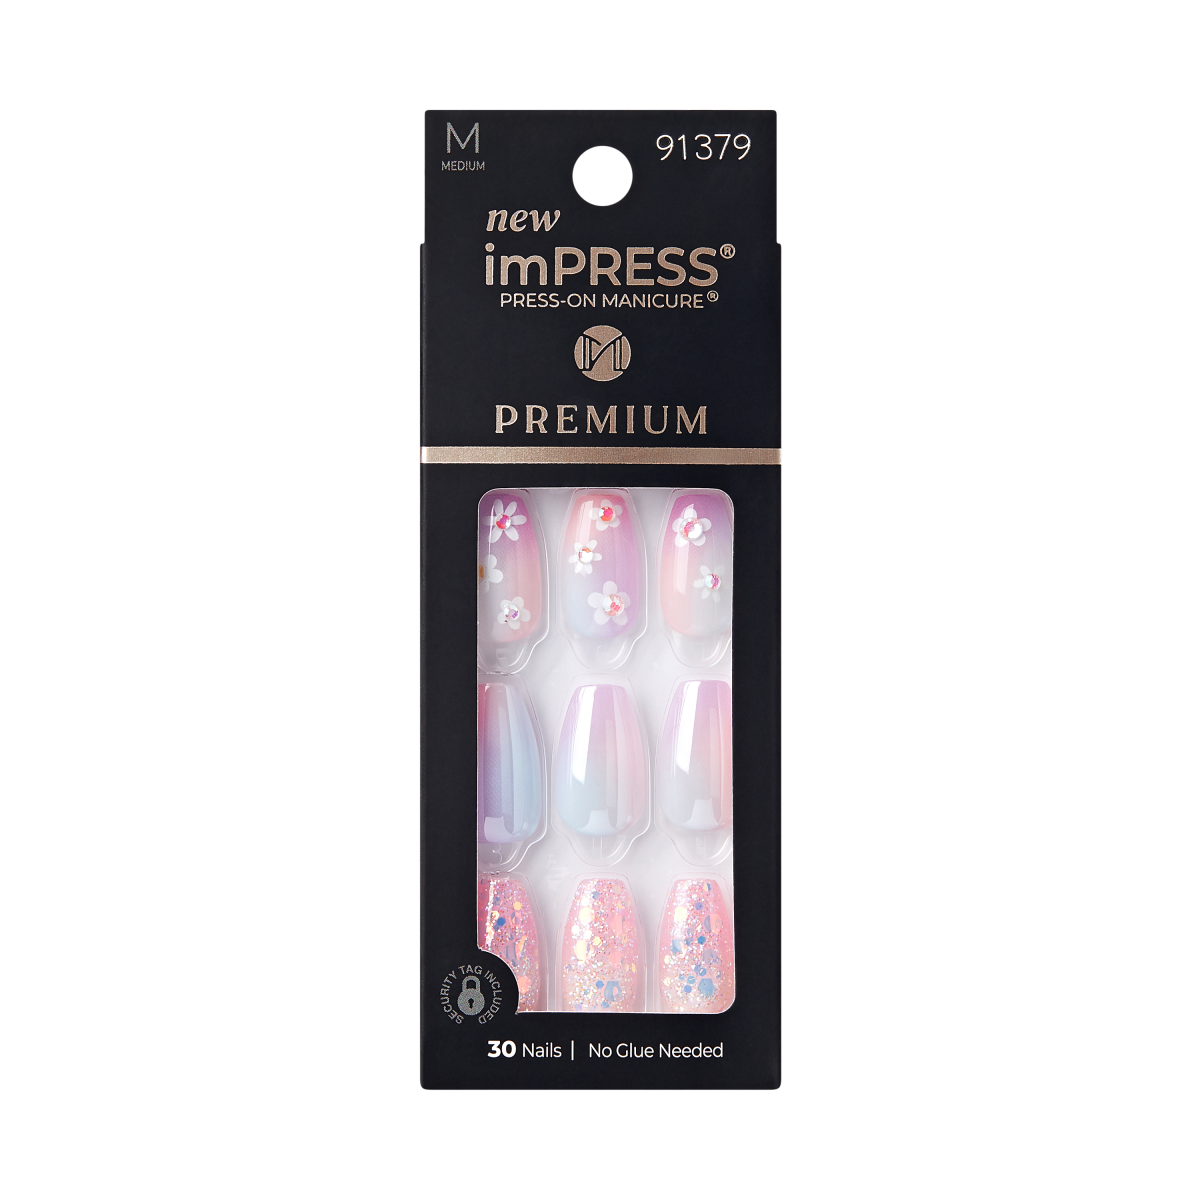 imPRESS Premium Press-On Manicure - Portal